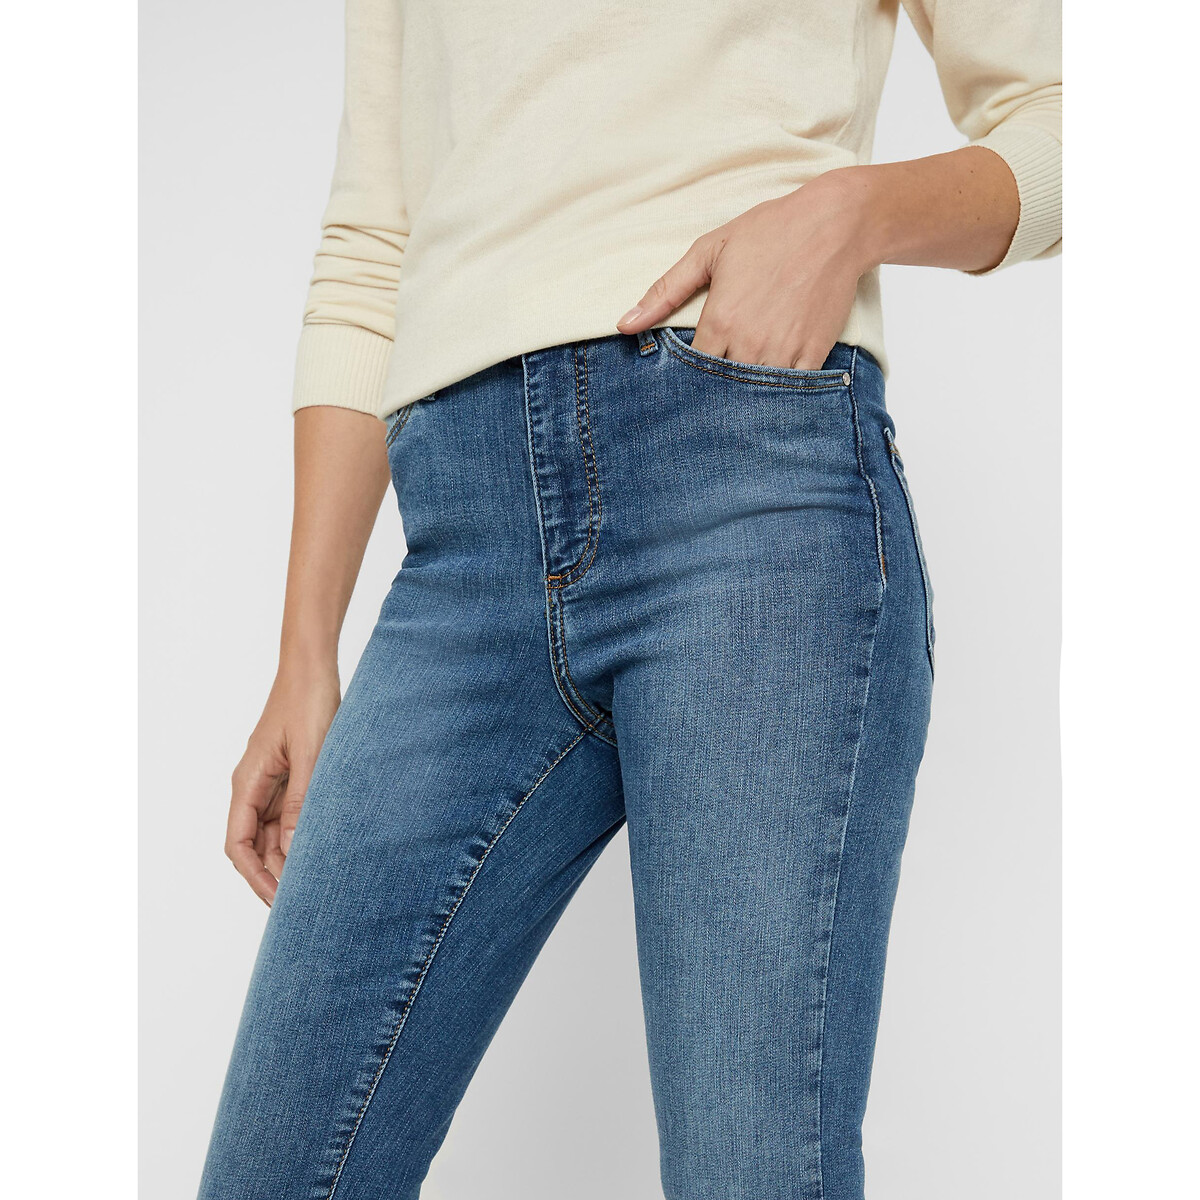 Jeans skinny de cintura subida, nmcallie medium blue Noisy May